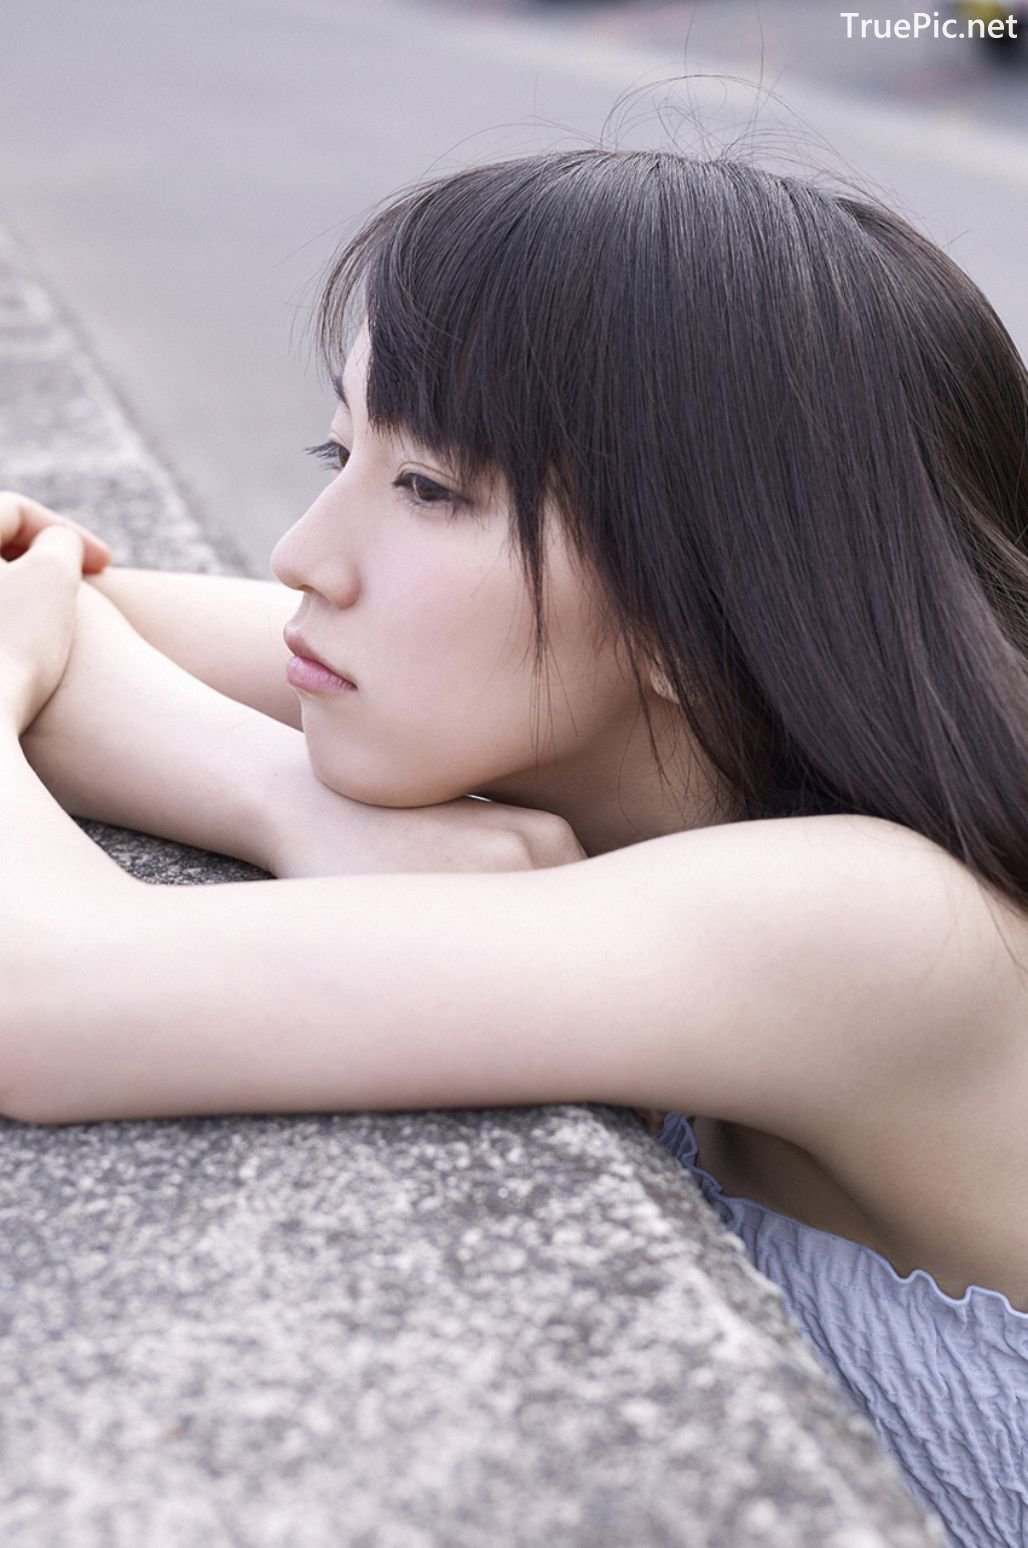 Image-Japanese-Actress-And-Model-Riho-Yoshioka-Pure-Beauty-Of-Sea-Goddess-TruePic.net- Picture-151